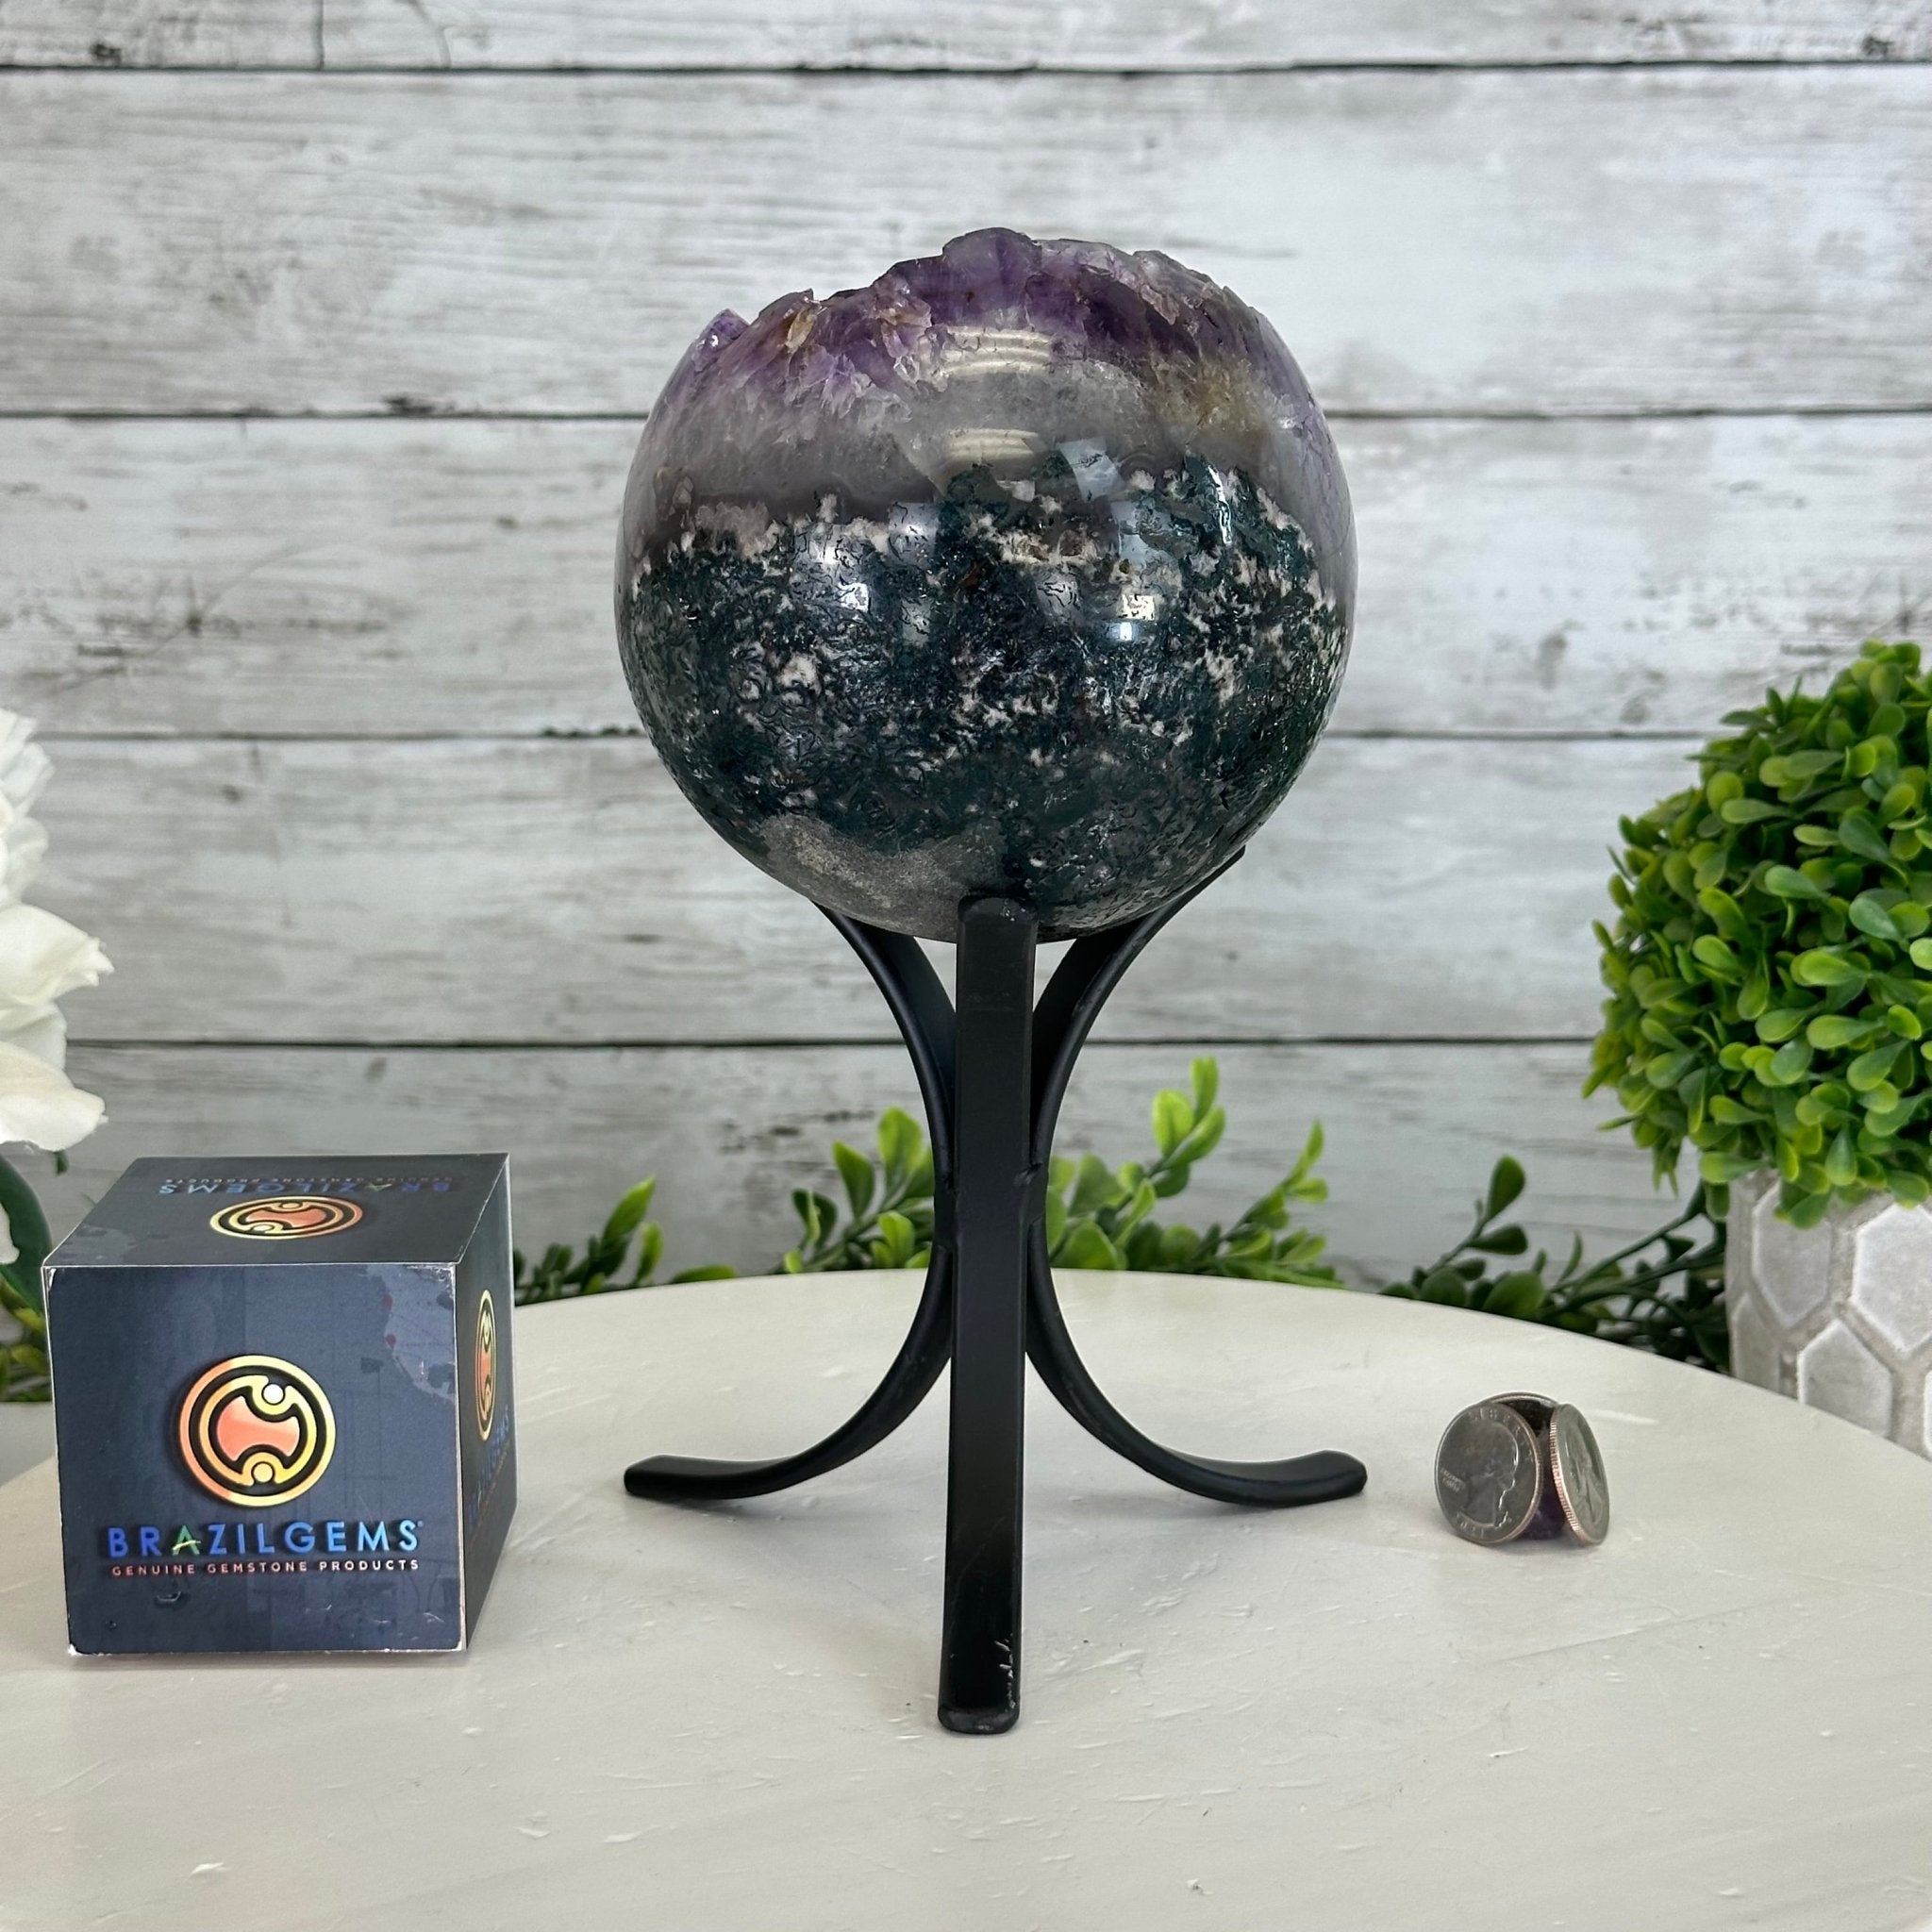 Druzy Amethyst Sphere on a Metal Stand, 3.6 lbs & 9.1" Tall #5630-0055 - Brazil GemsBrazil GemsDruzy Amethyst Sphere on a Metal Stand, 3.6 lbs & 9.1" Tall #5630-0055Spheres5630-0055